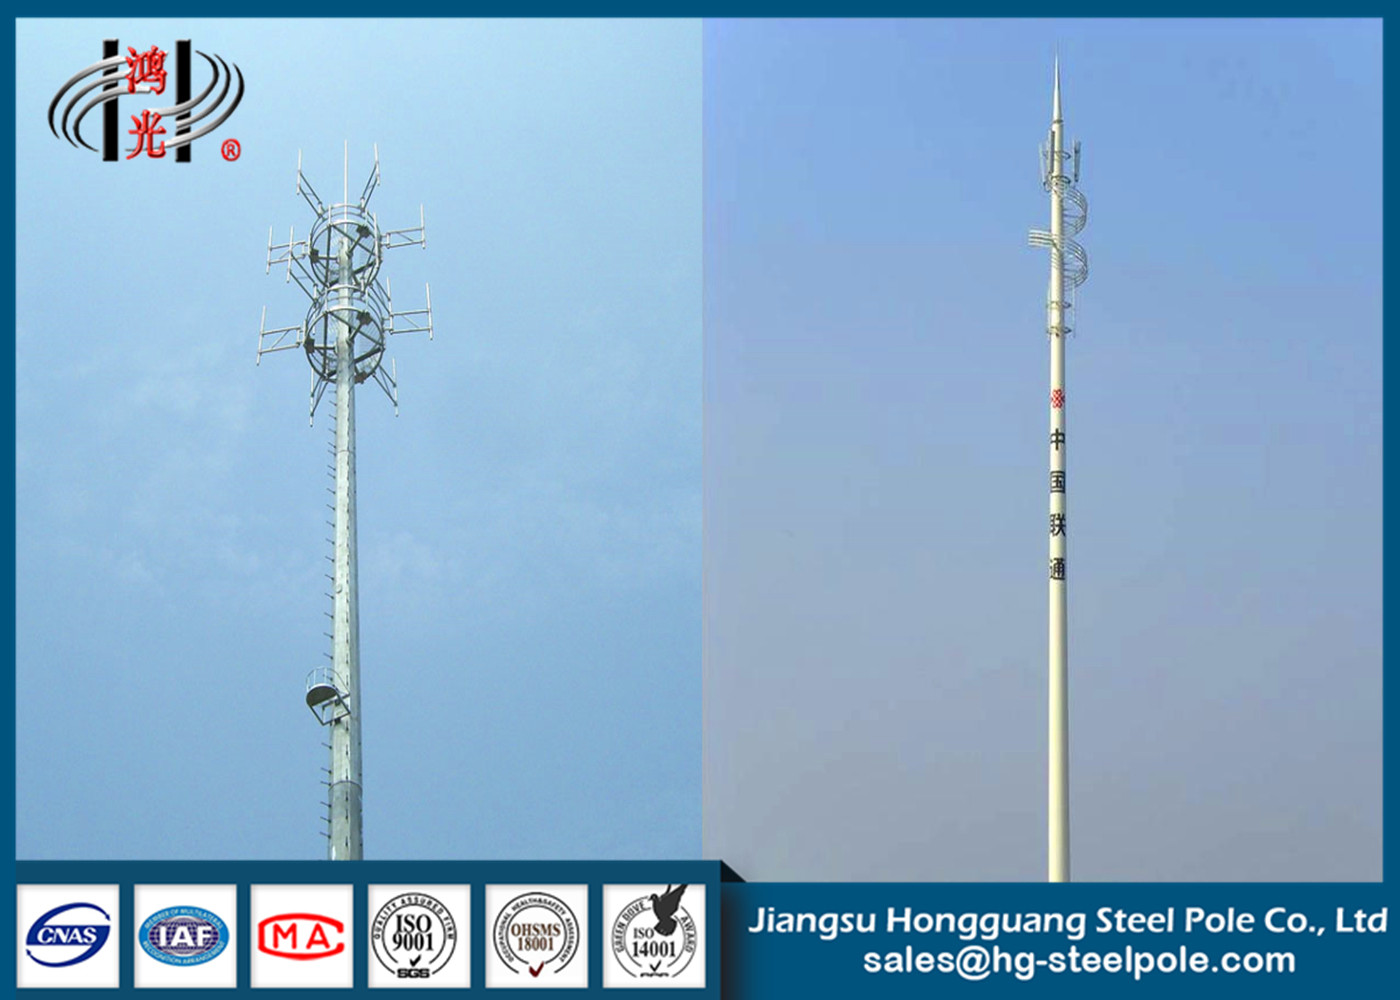 45m runde Telekommunikations-Turm-Handy-Antennenmaste